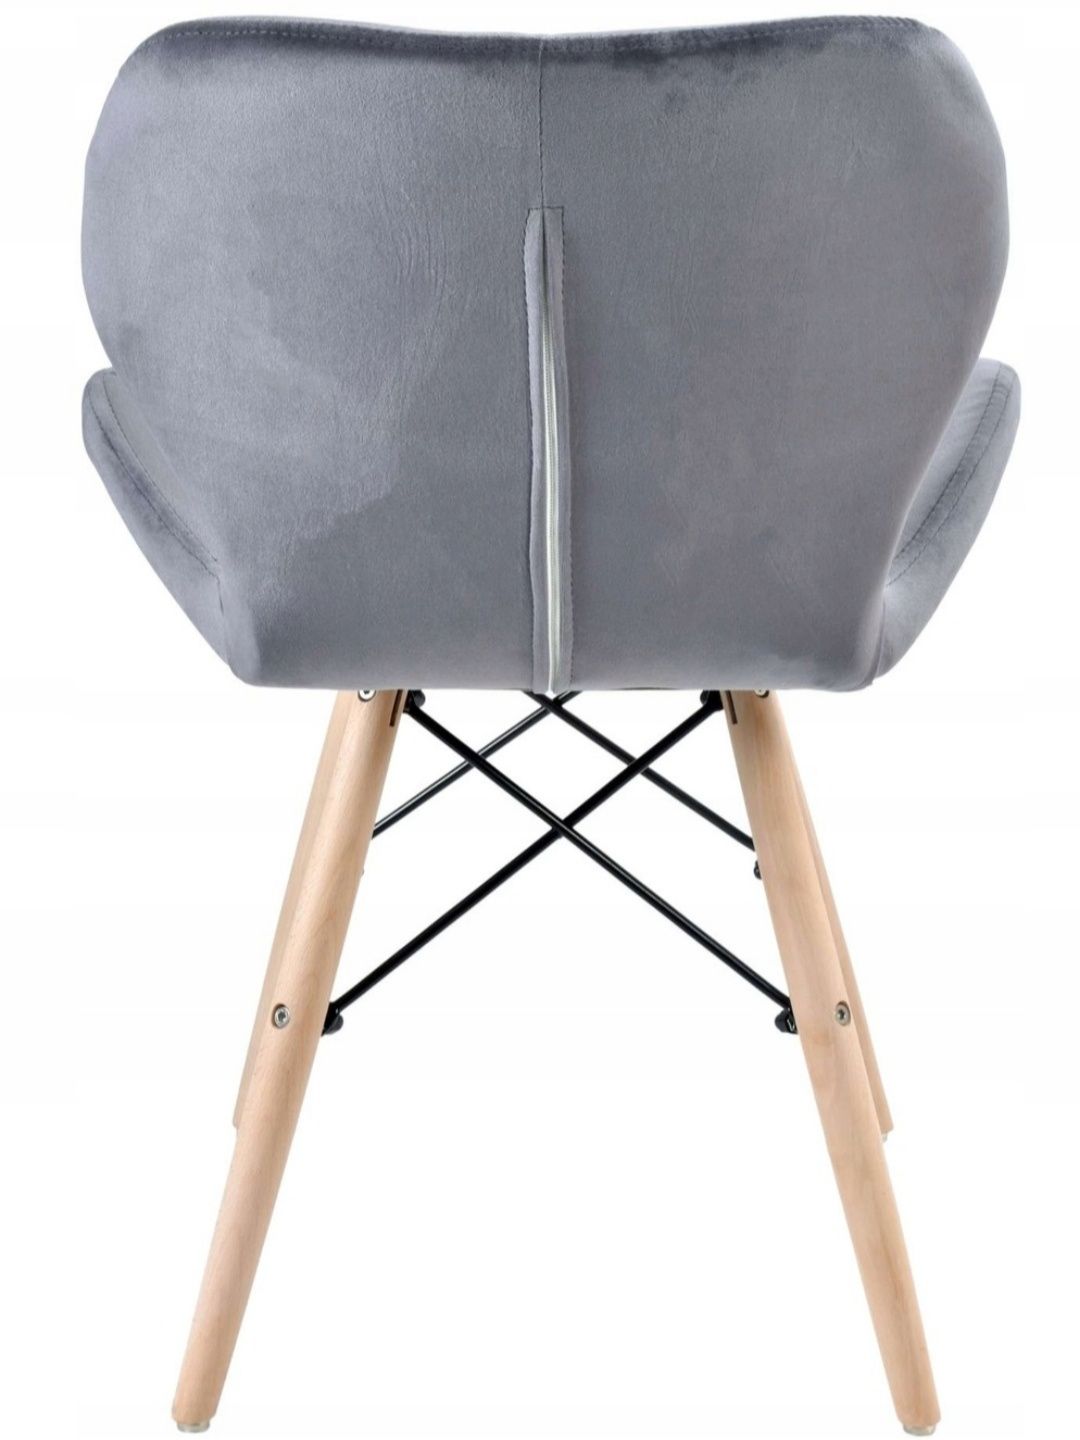 Крісло м'яке сучасне стильне стульчик оксамит гарний дизайн